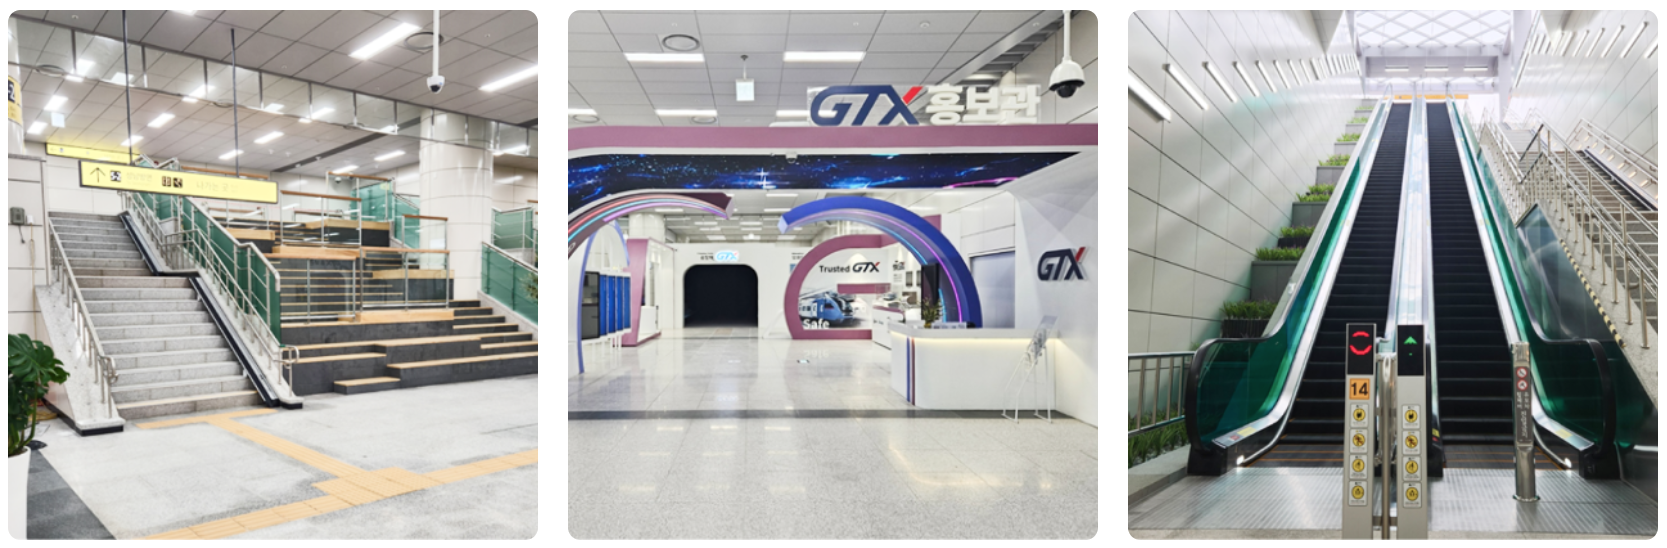 GTX-A 수원역 열차